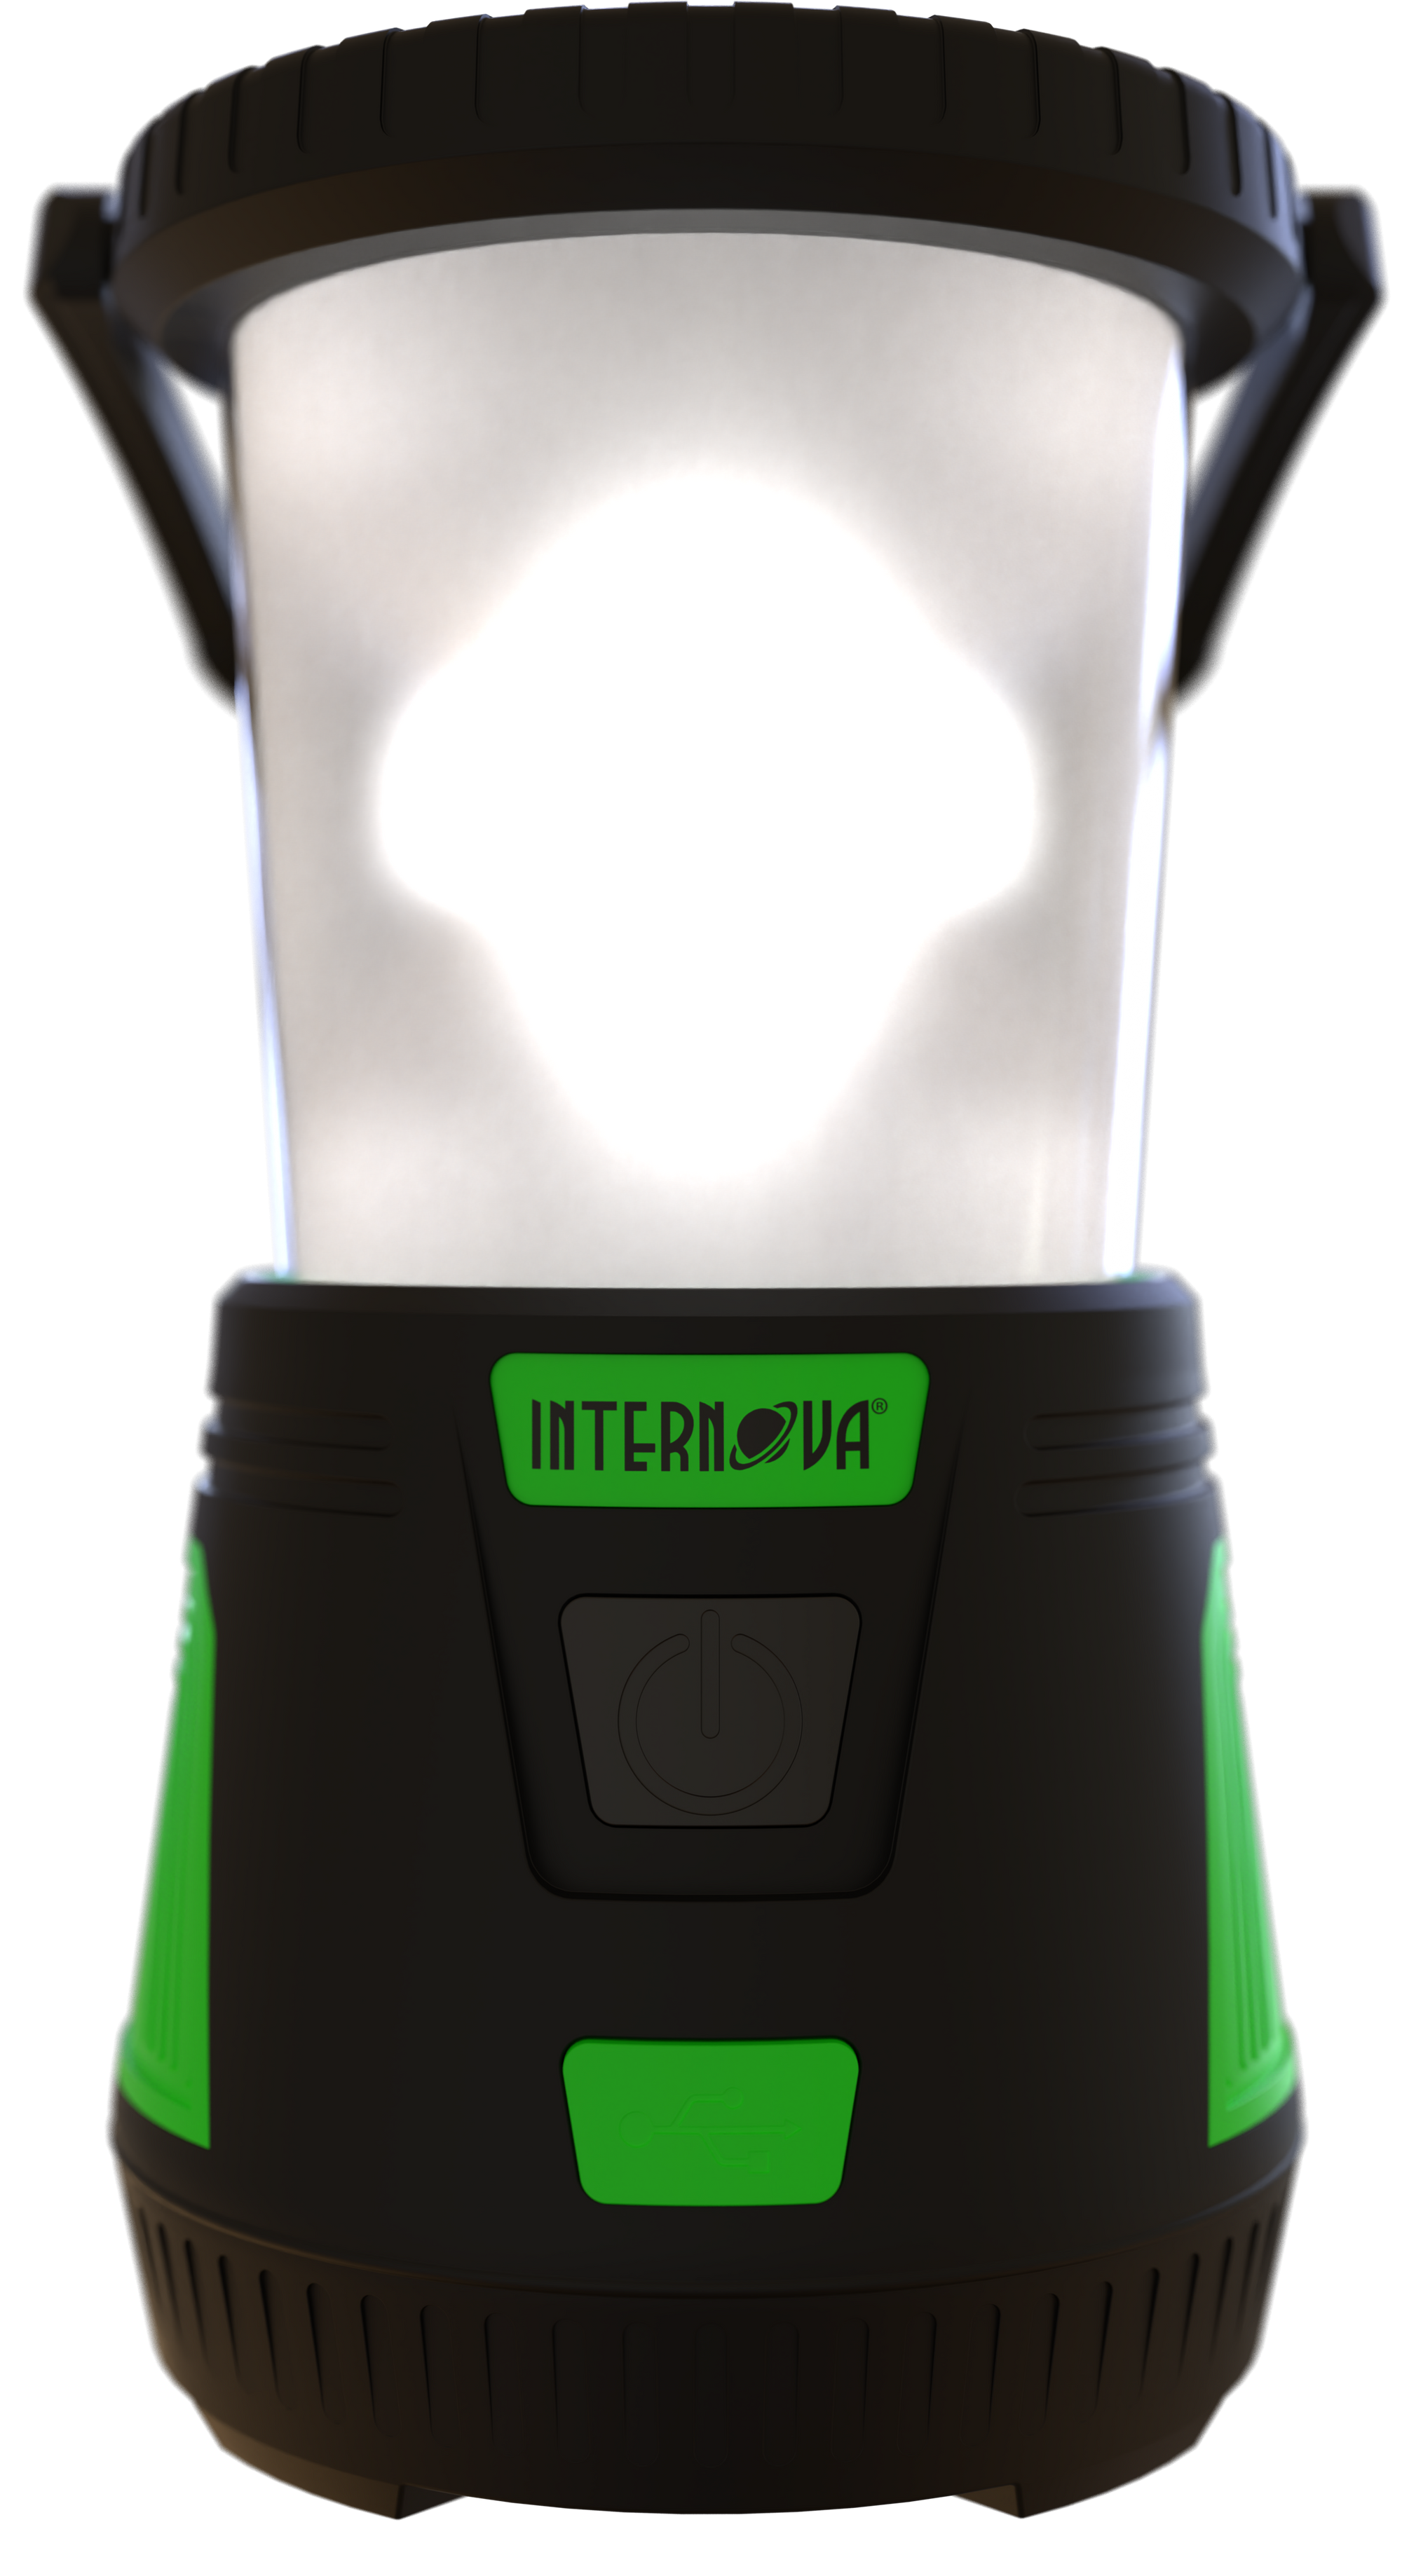 Internova Junior Monster Hurricane & Camping Lantern